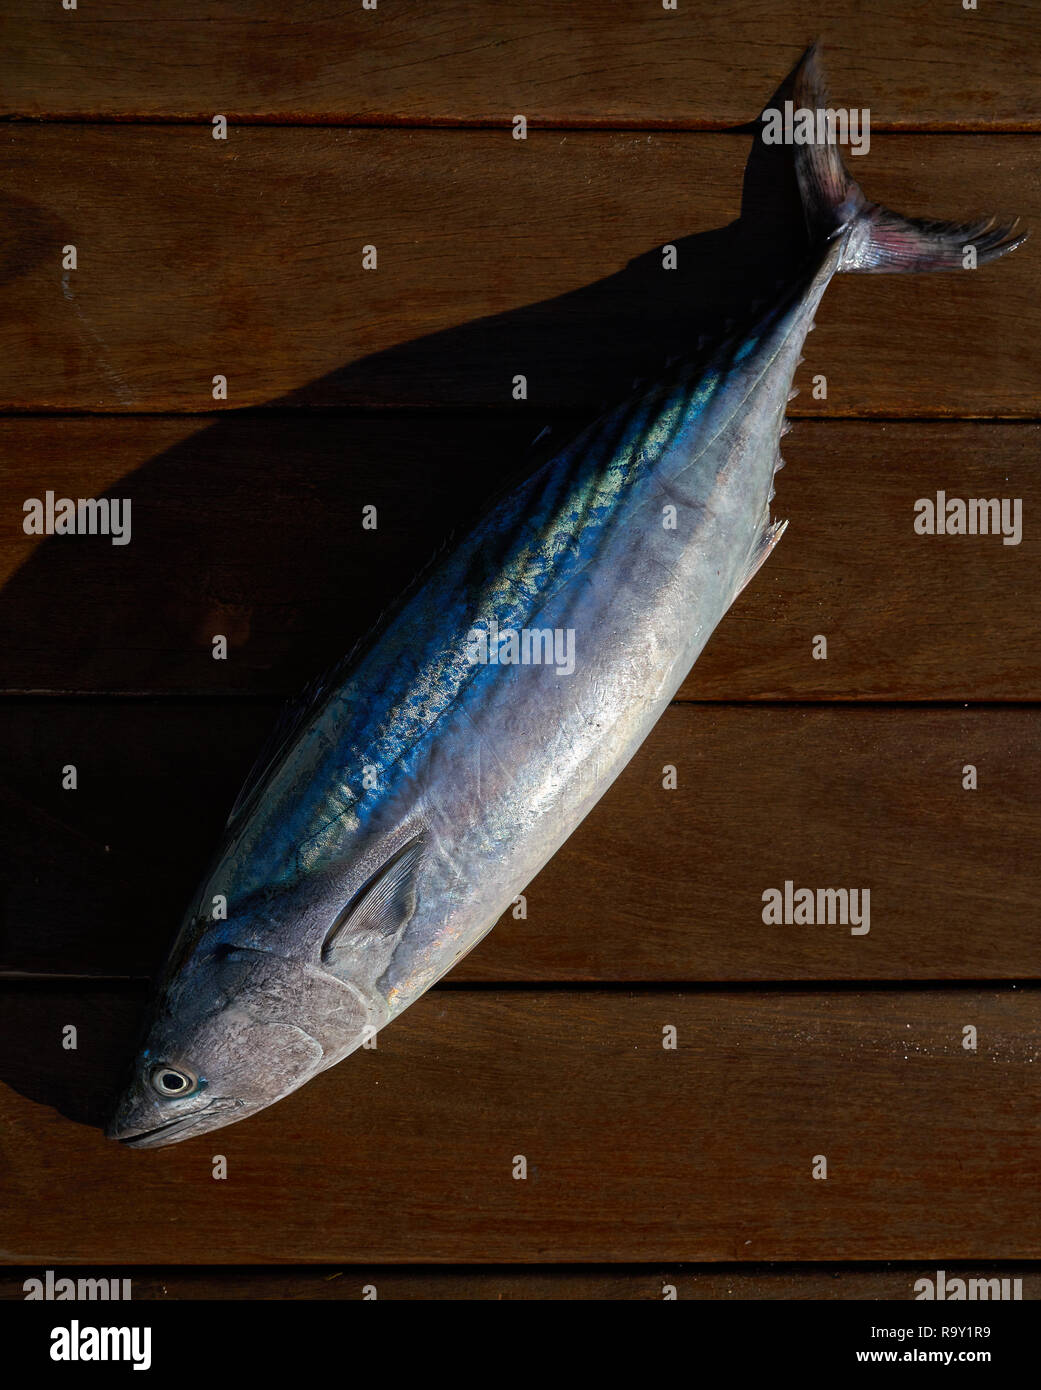 Bonito fish Sarda Sarda tuna fresh catch on wt wood board Stock Photo